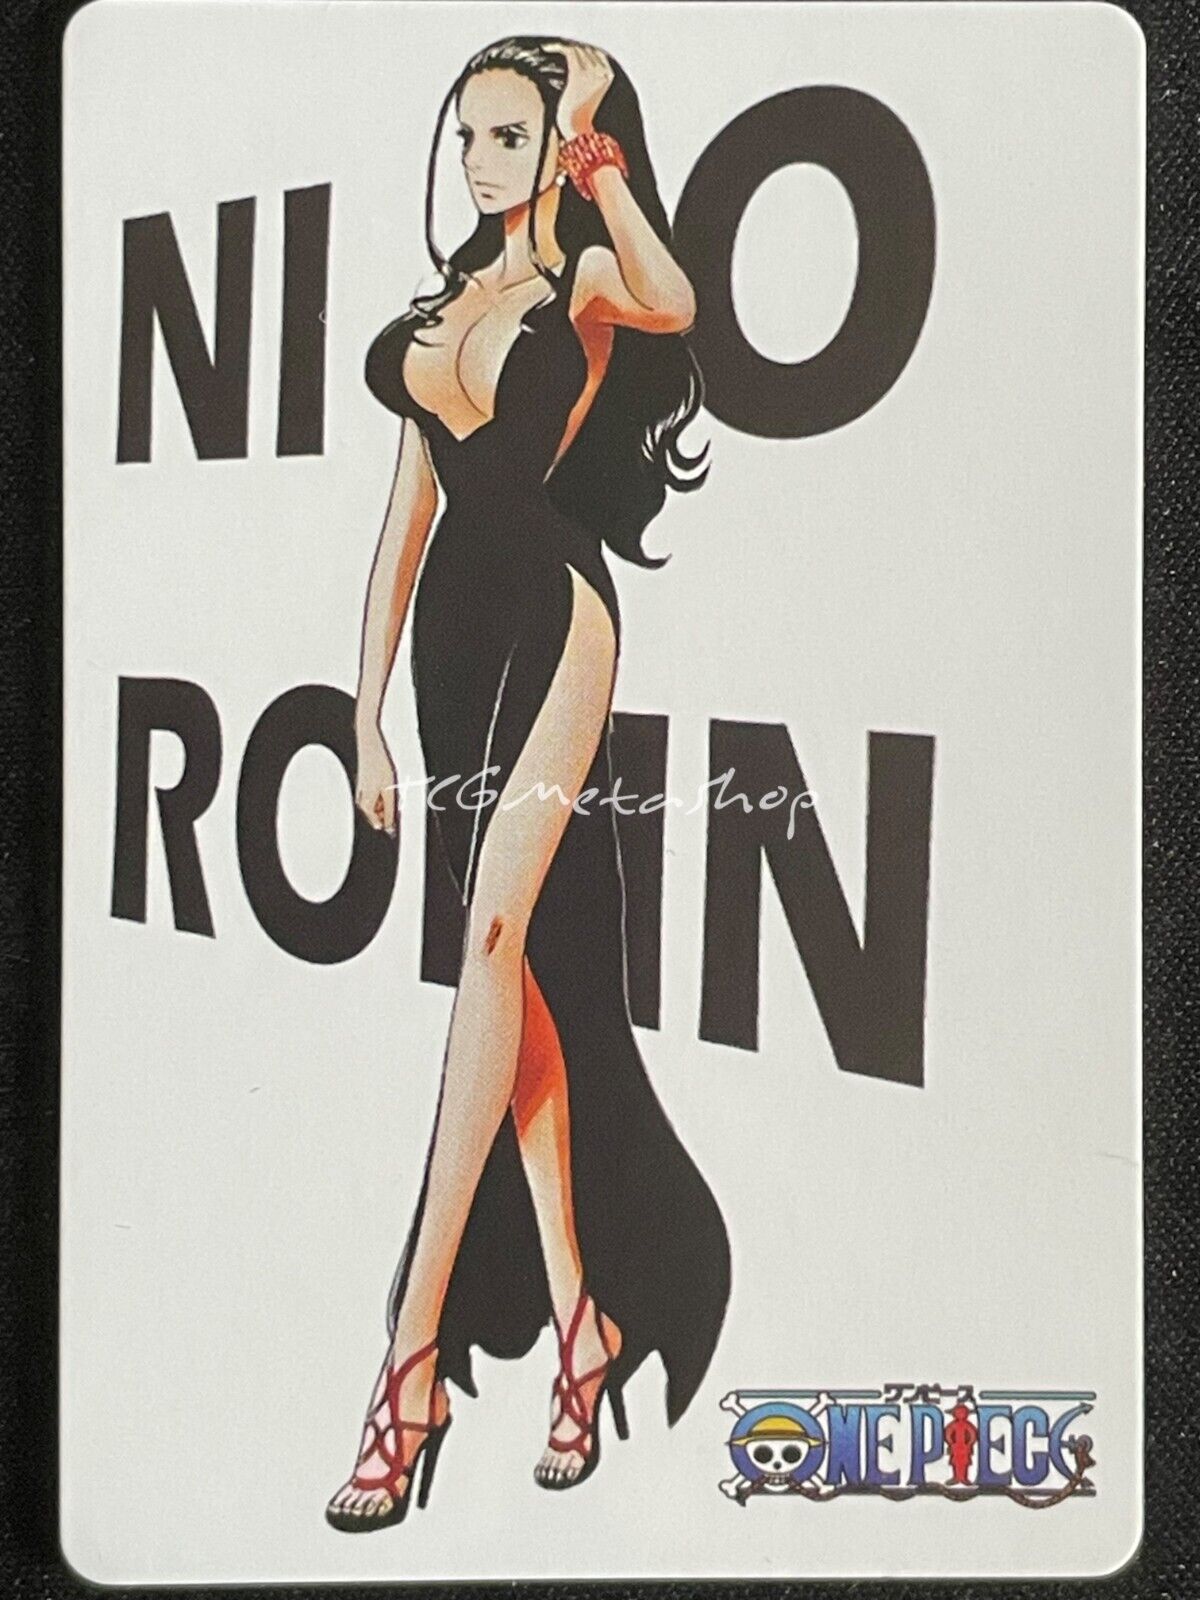 🔥 Nico Robin One Piece Goddess Story Anime Card ACG # 2789 🔥